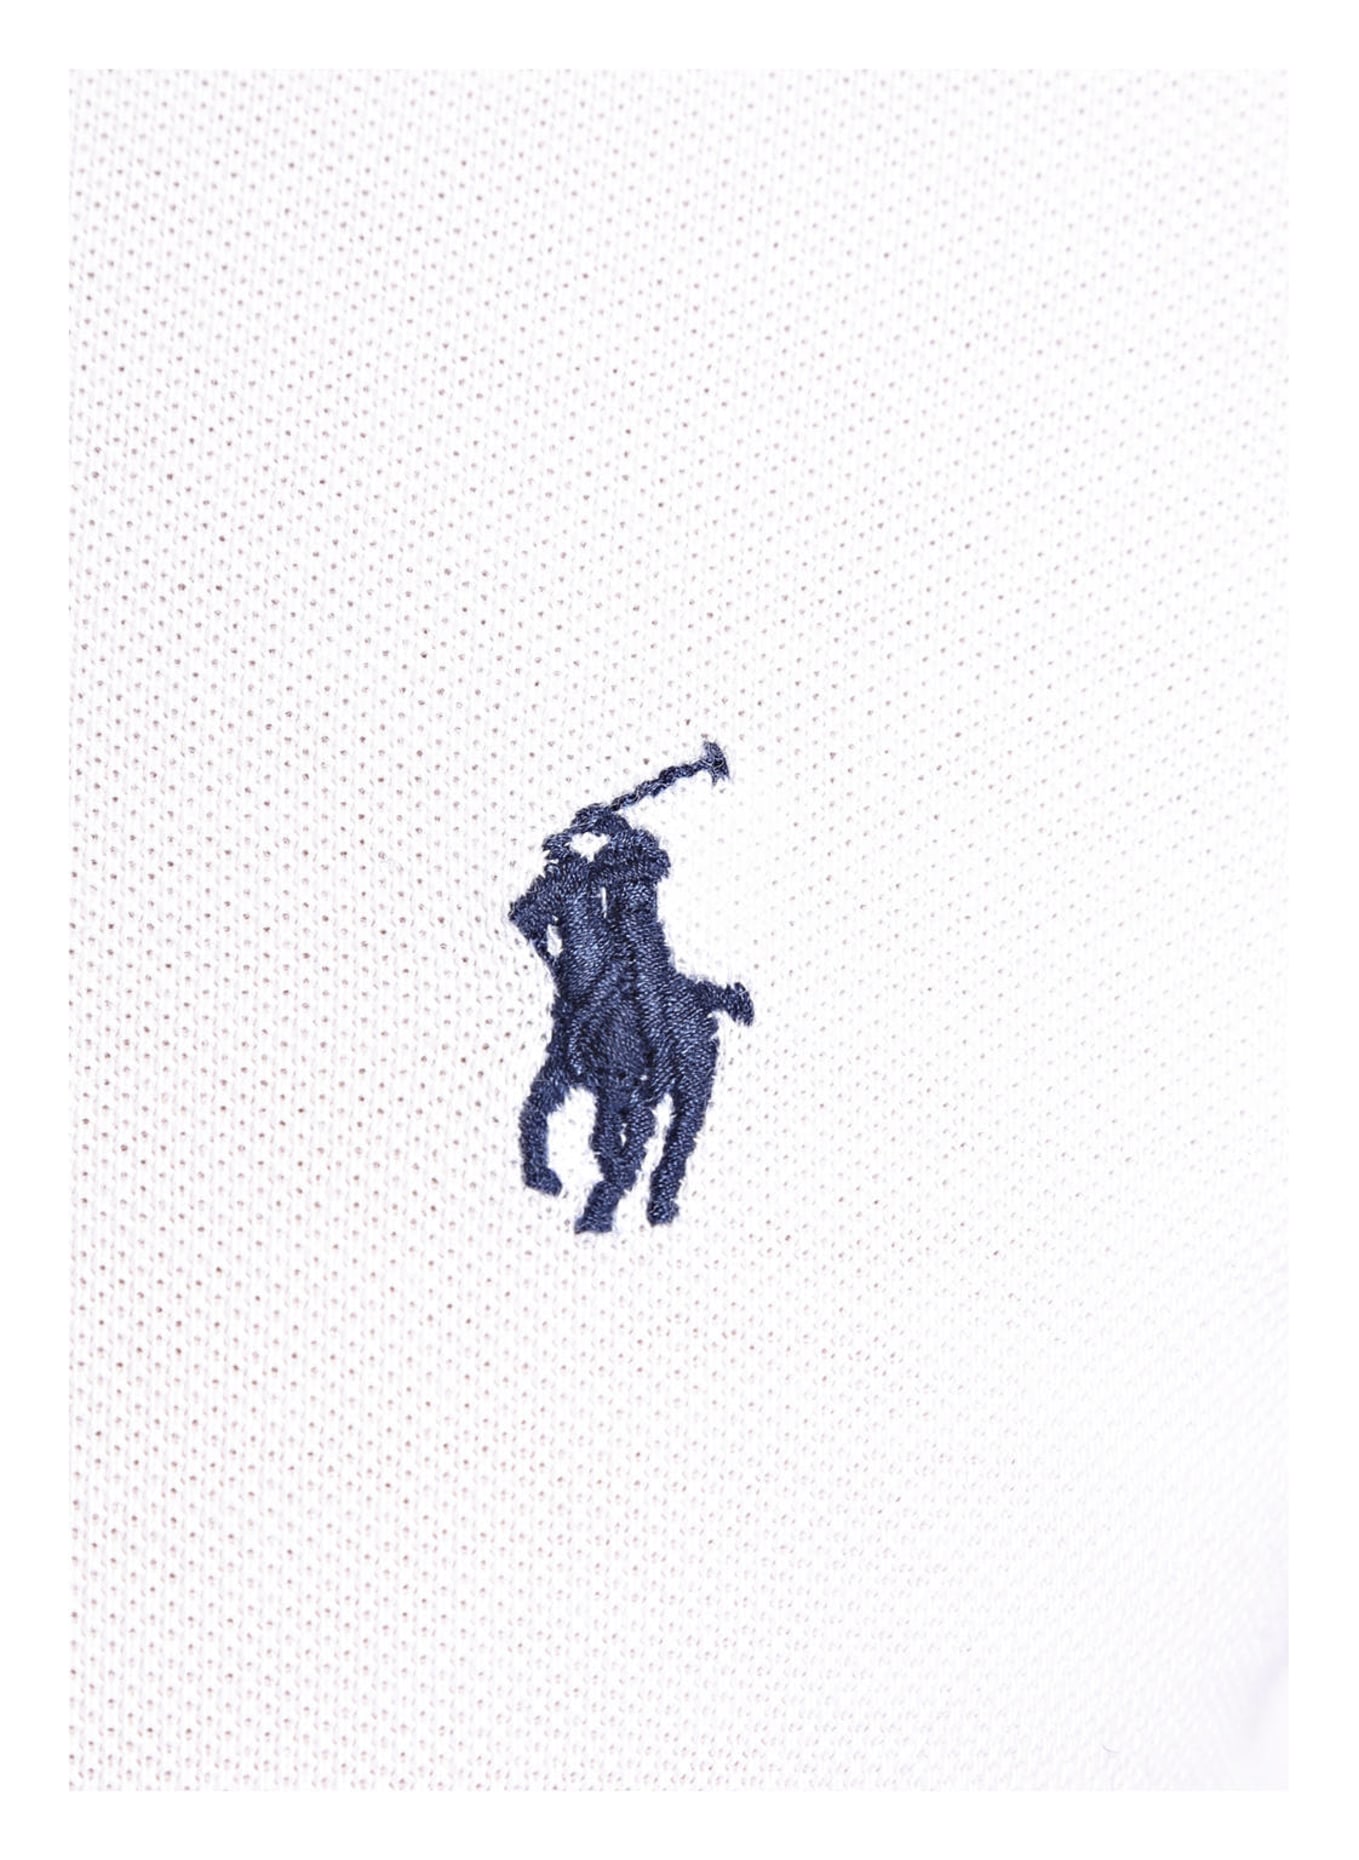 POLO RALPH LAUREN Piqué-Poloshirt Custom Slim Fit, Farbe: WEISS (Bild 4)